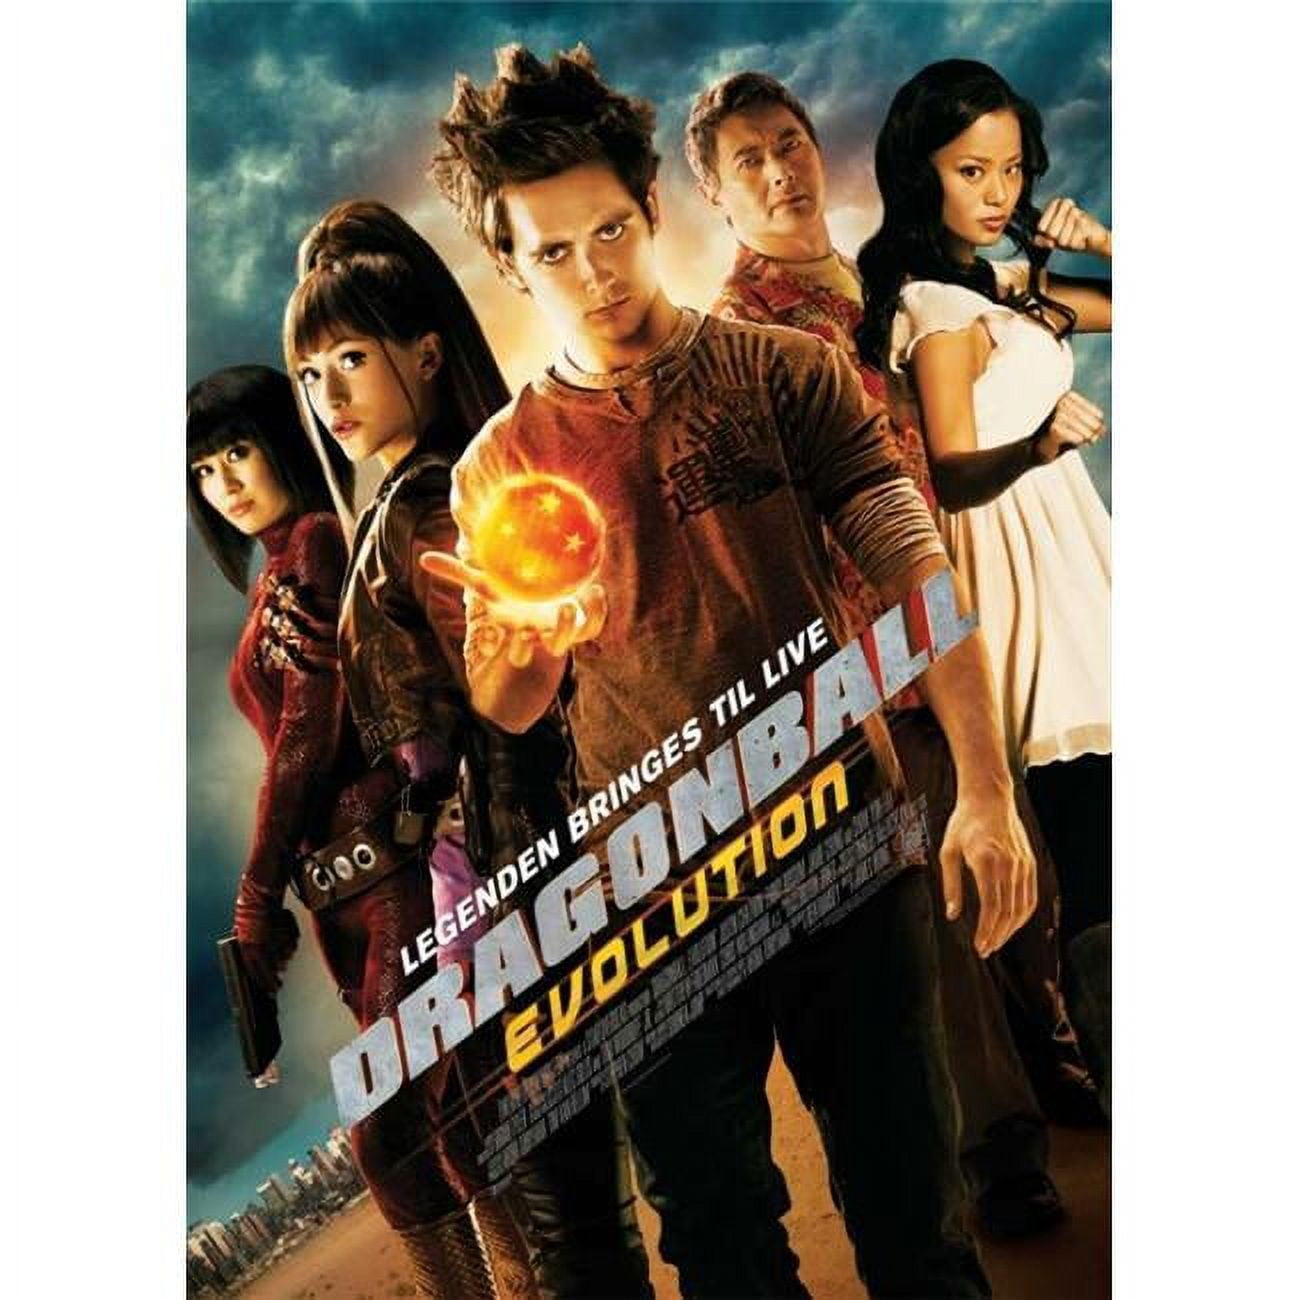 Dragonball Evolution Movie Review